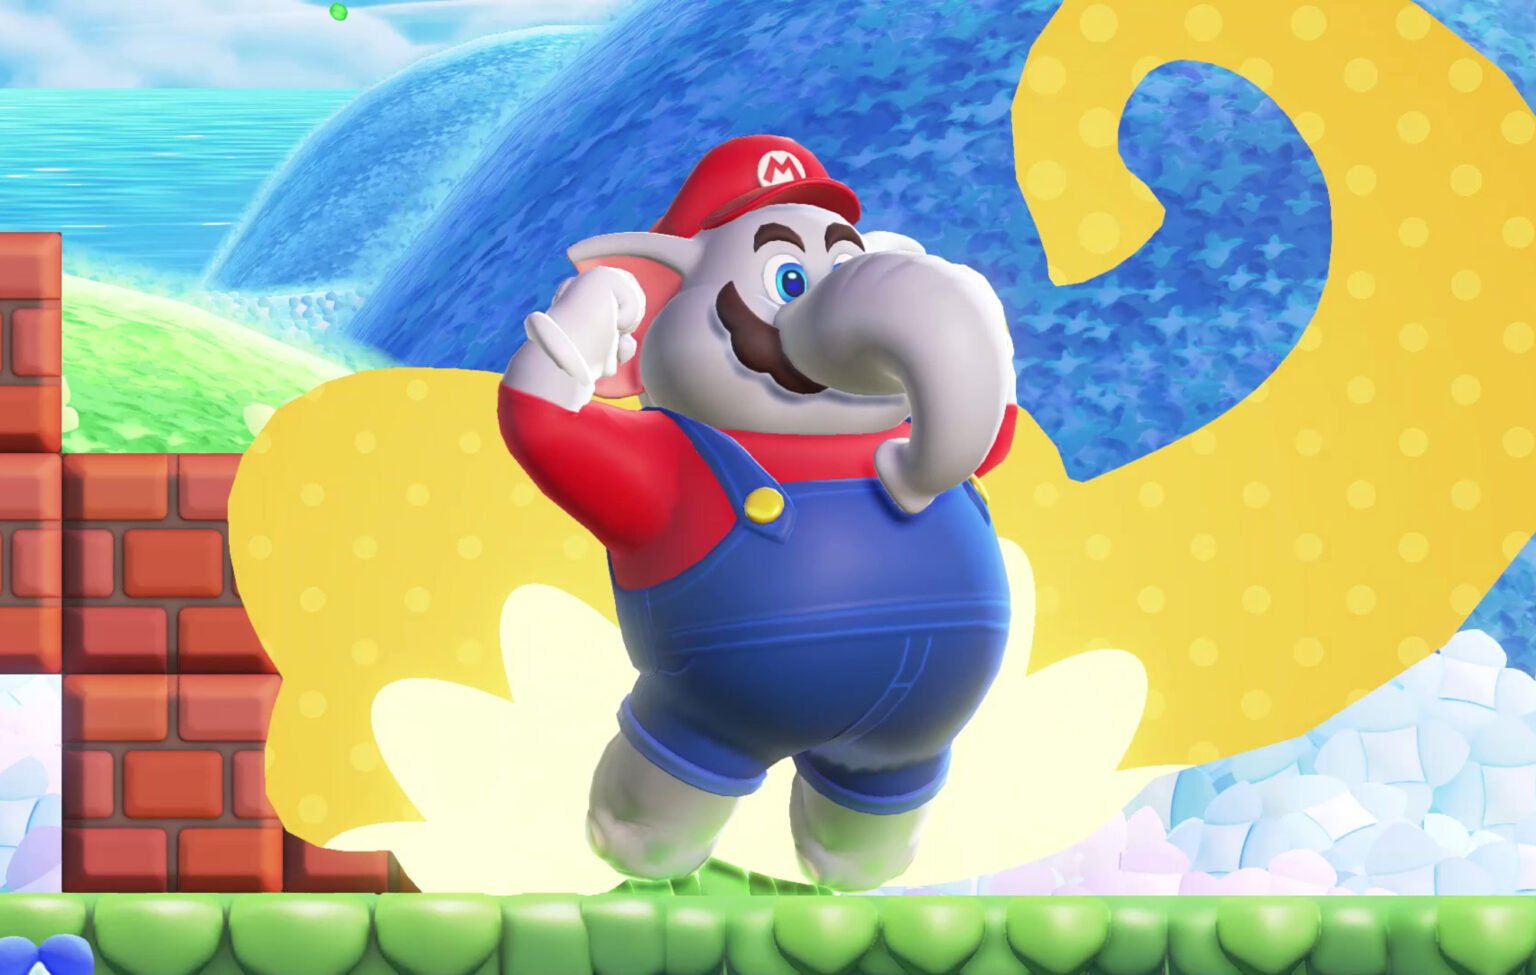 Crítica de ‘Super Mario Bros. Wonder’: vamos lá jogar essa delícia 2D